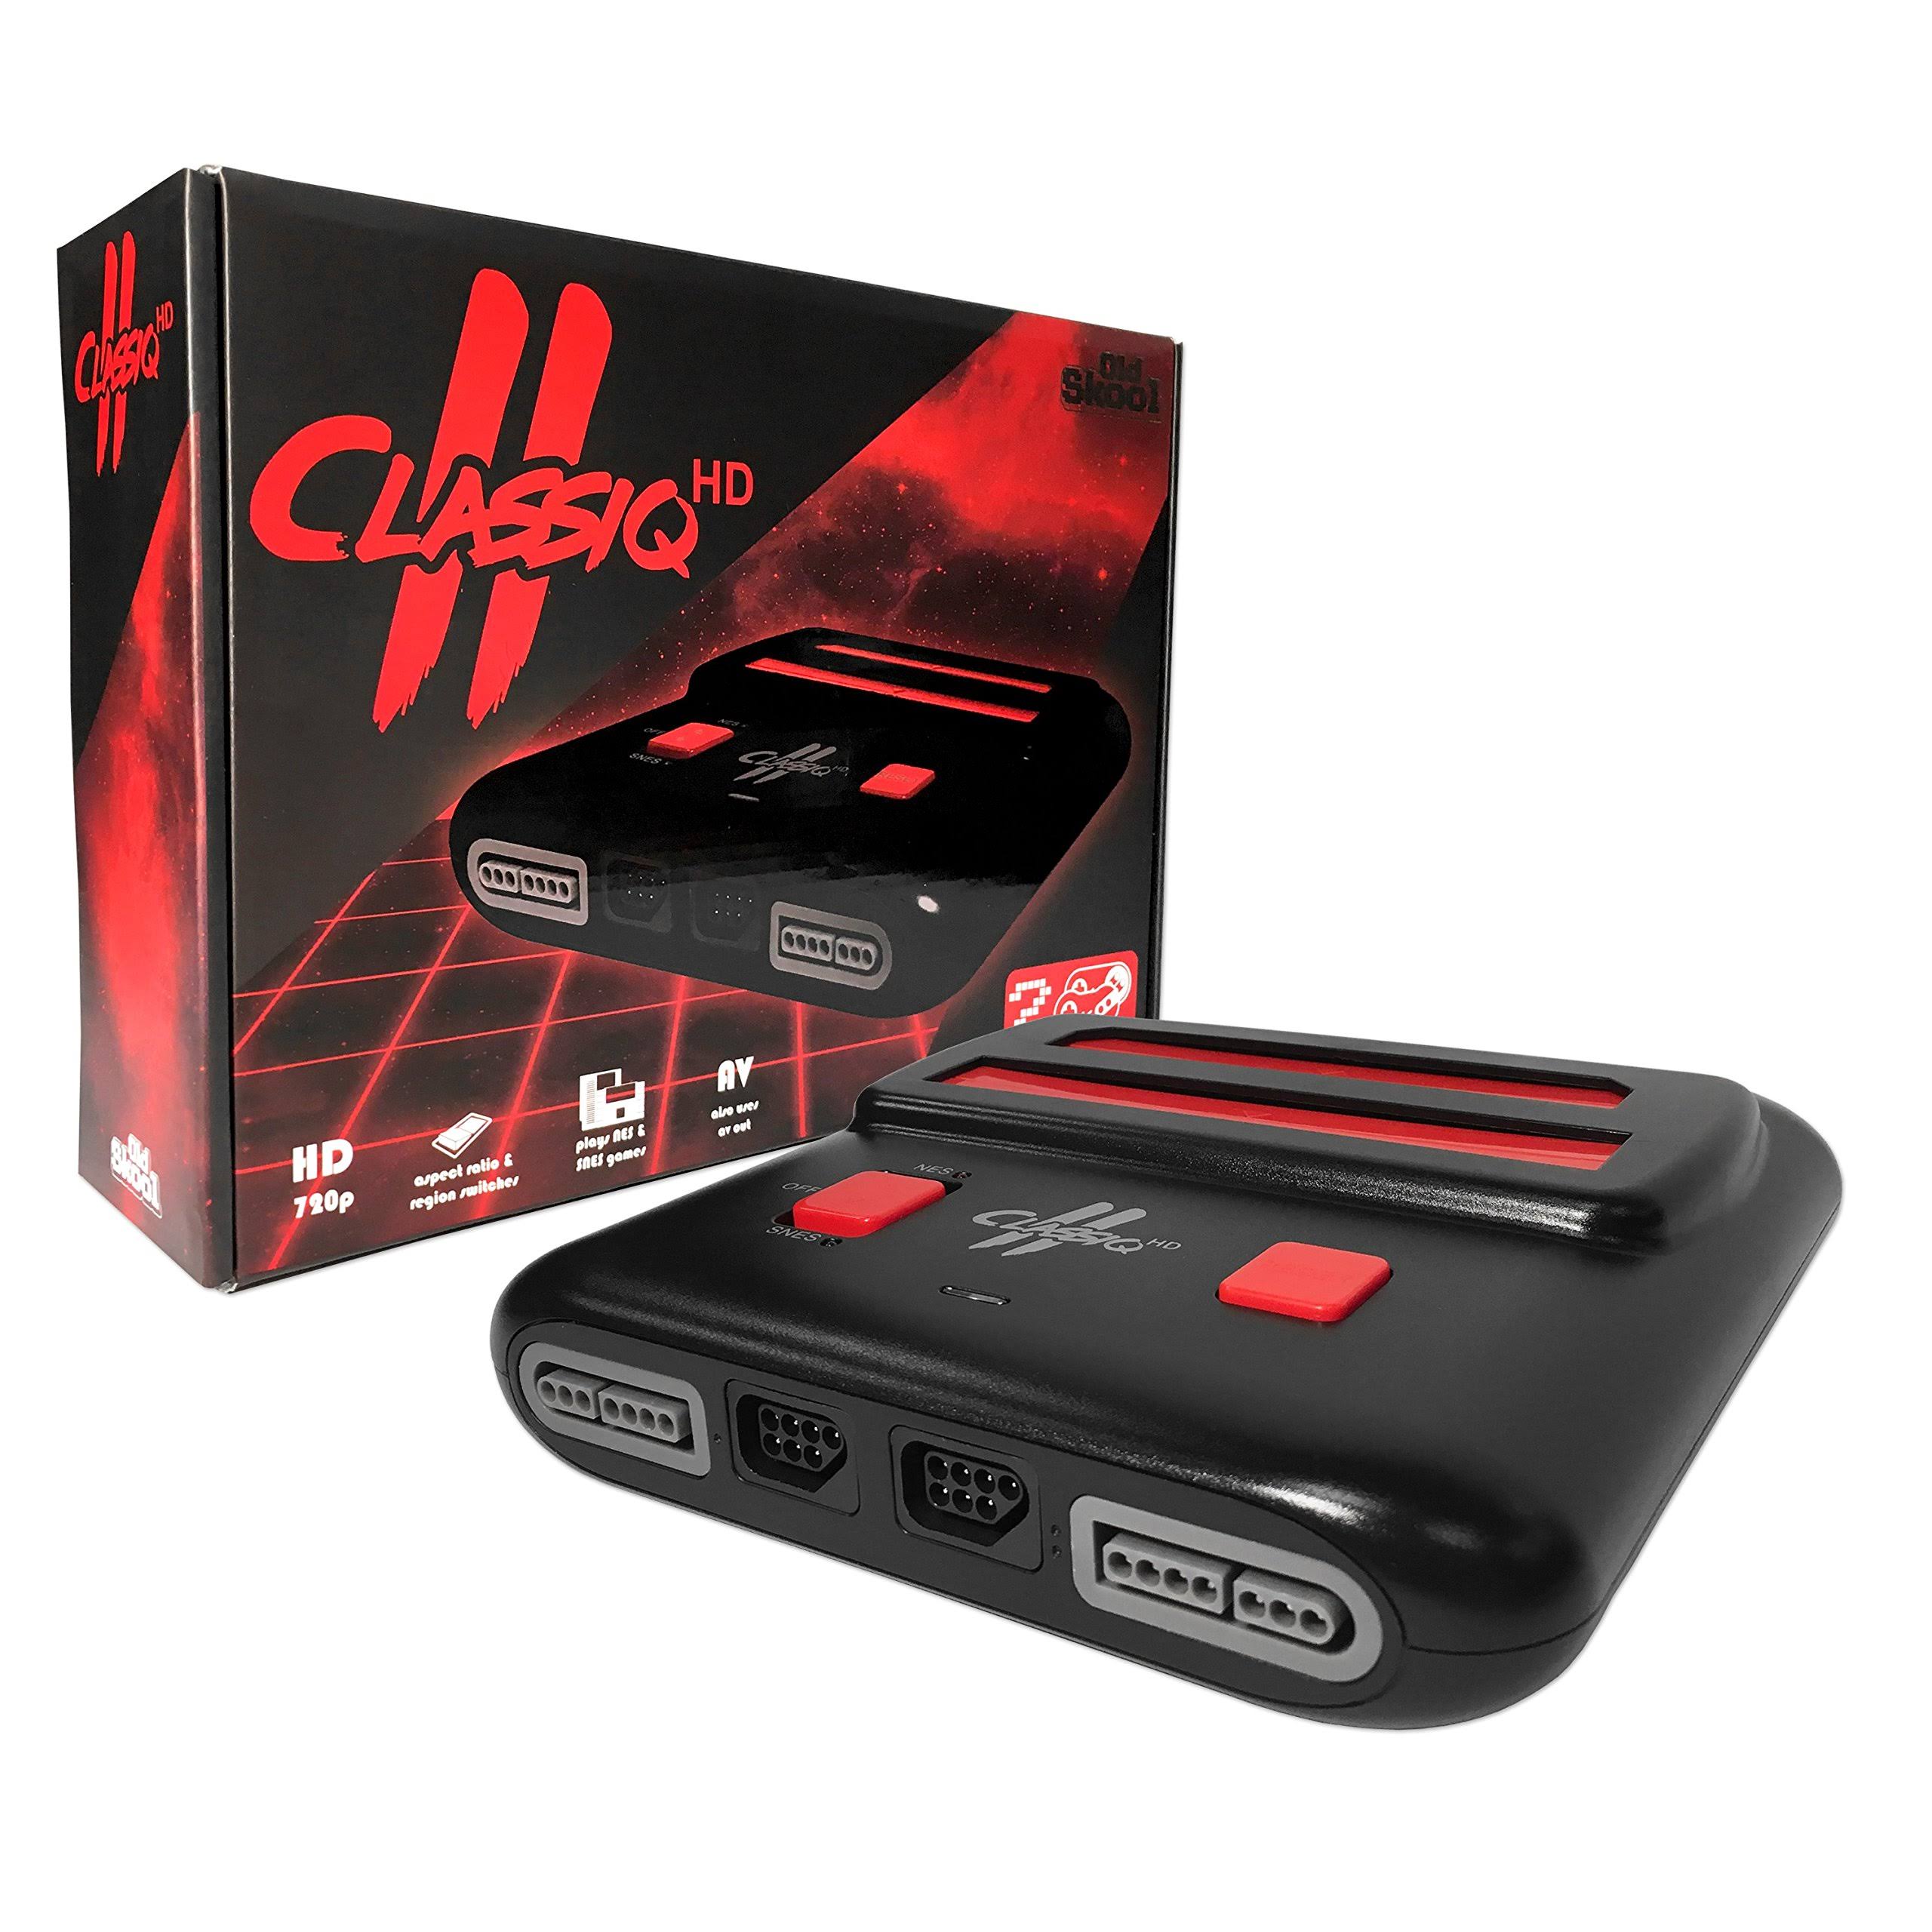 Old Skool Classiq 2 HD 720p Twin Video Game System, Black/Red